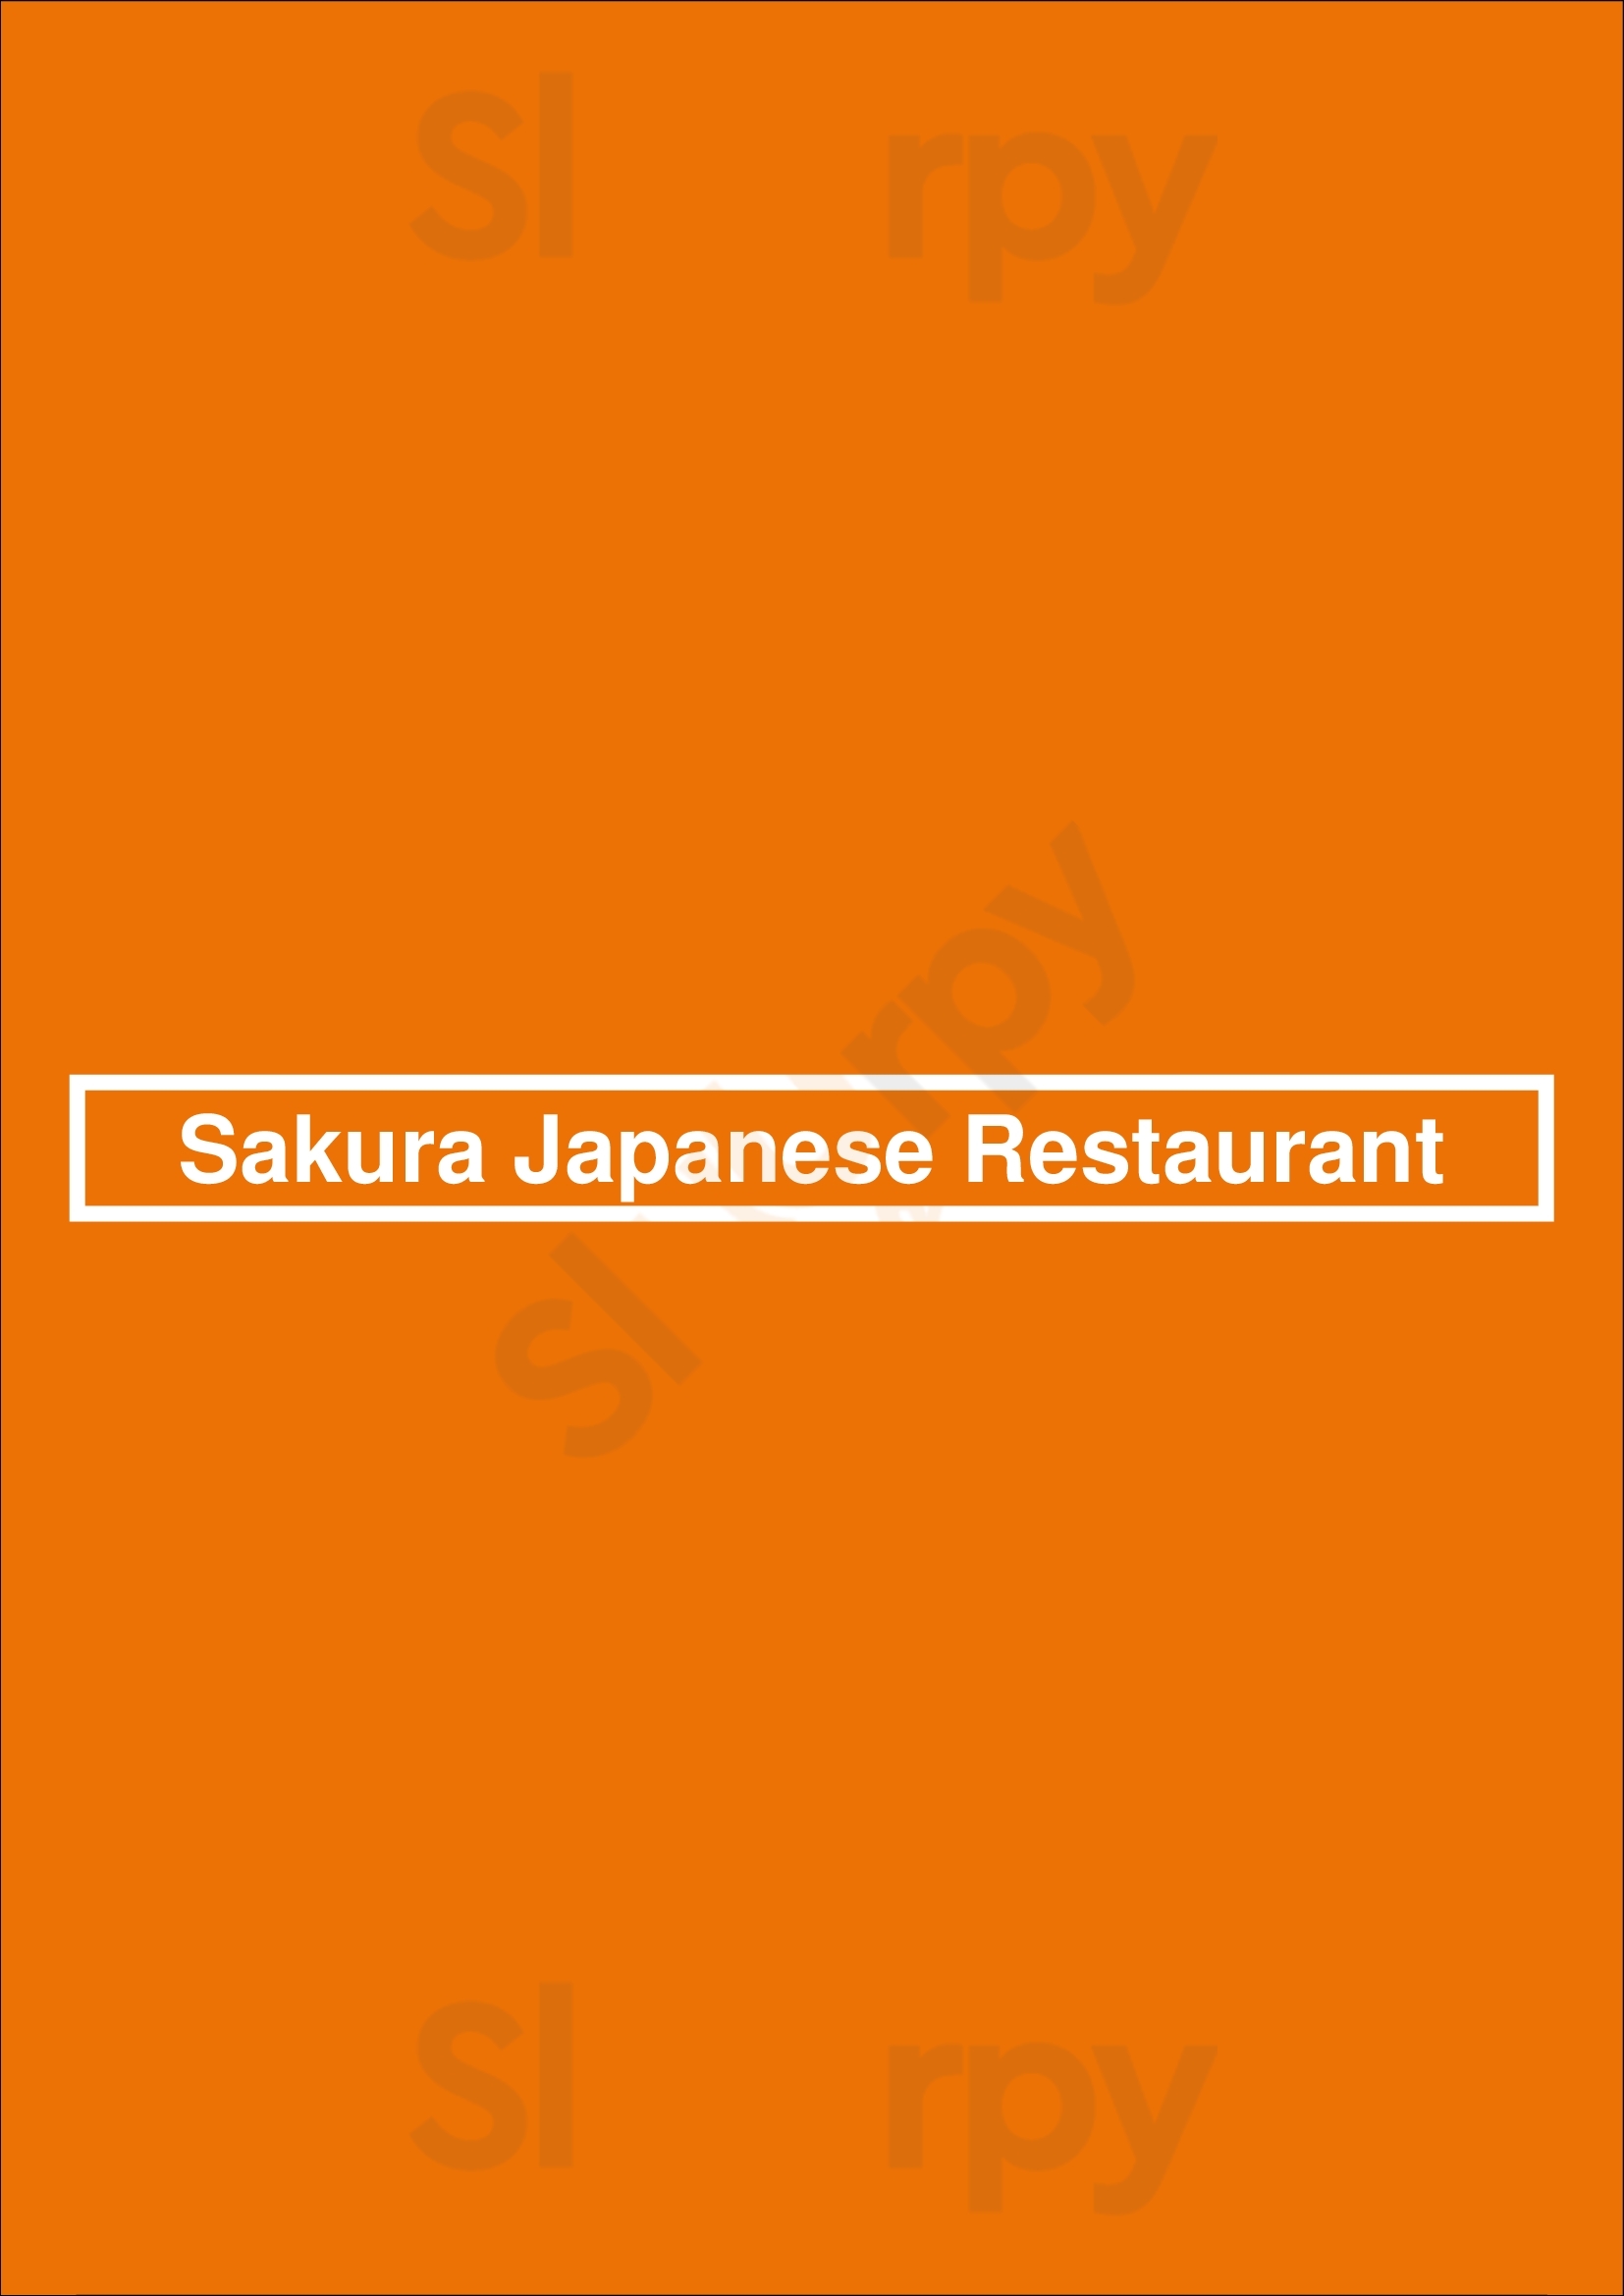 Sakura Japanese Restaurant Hattiesburg Menu - 1